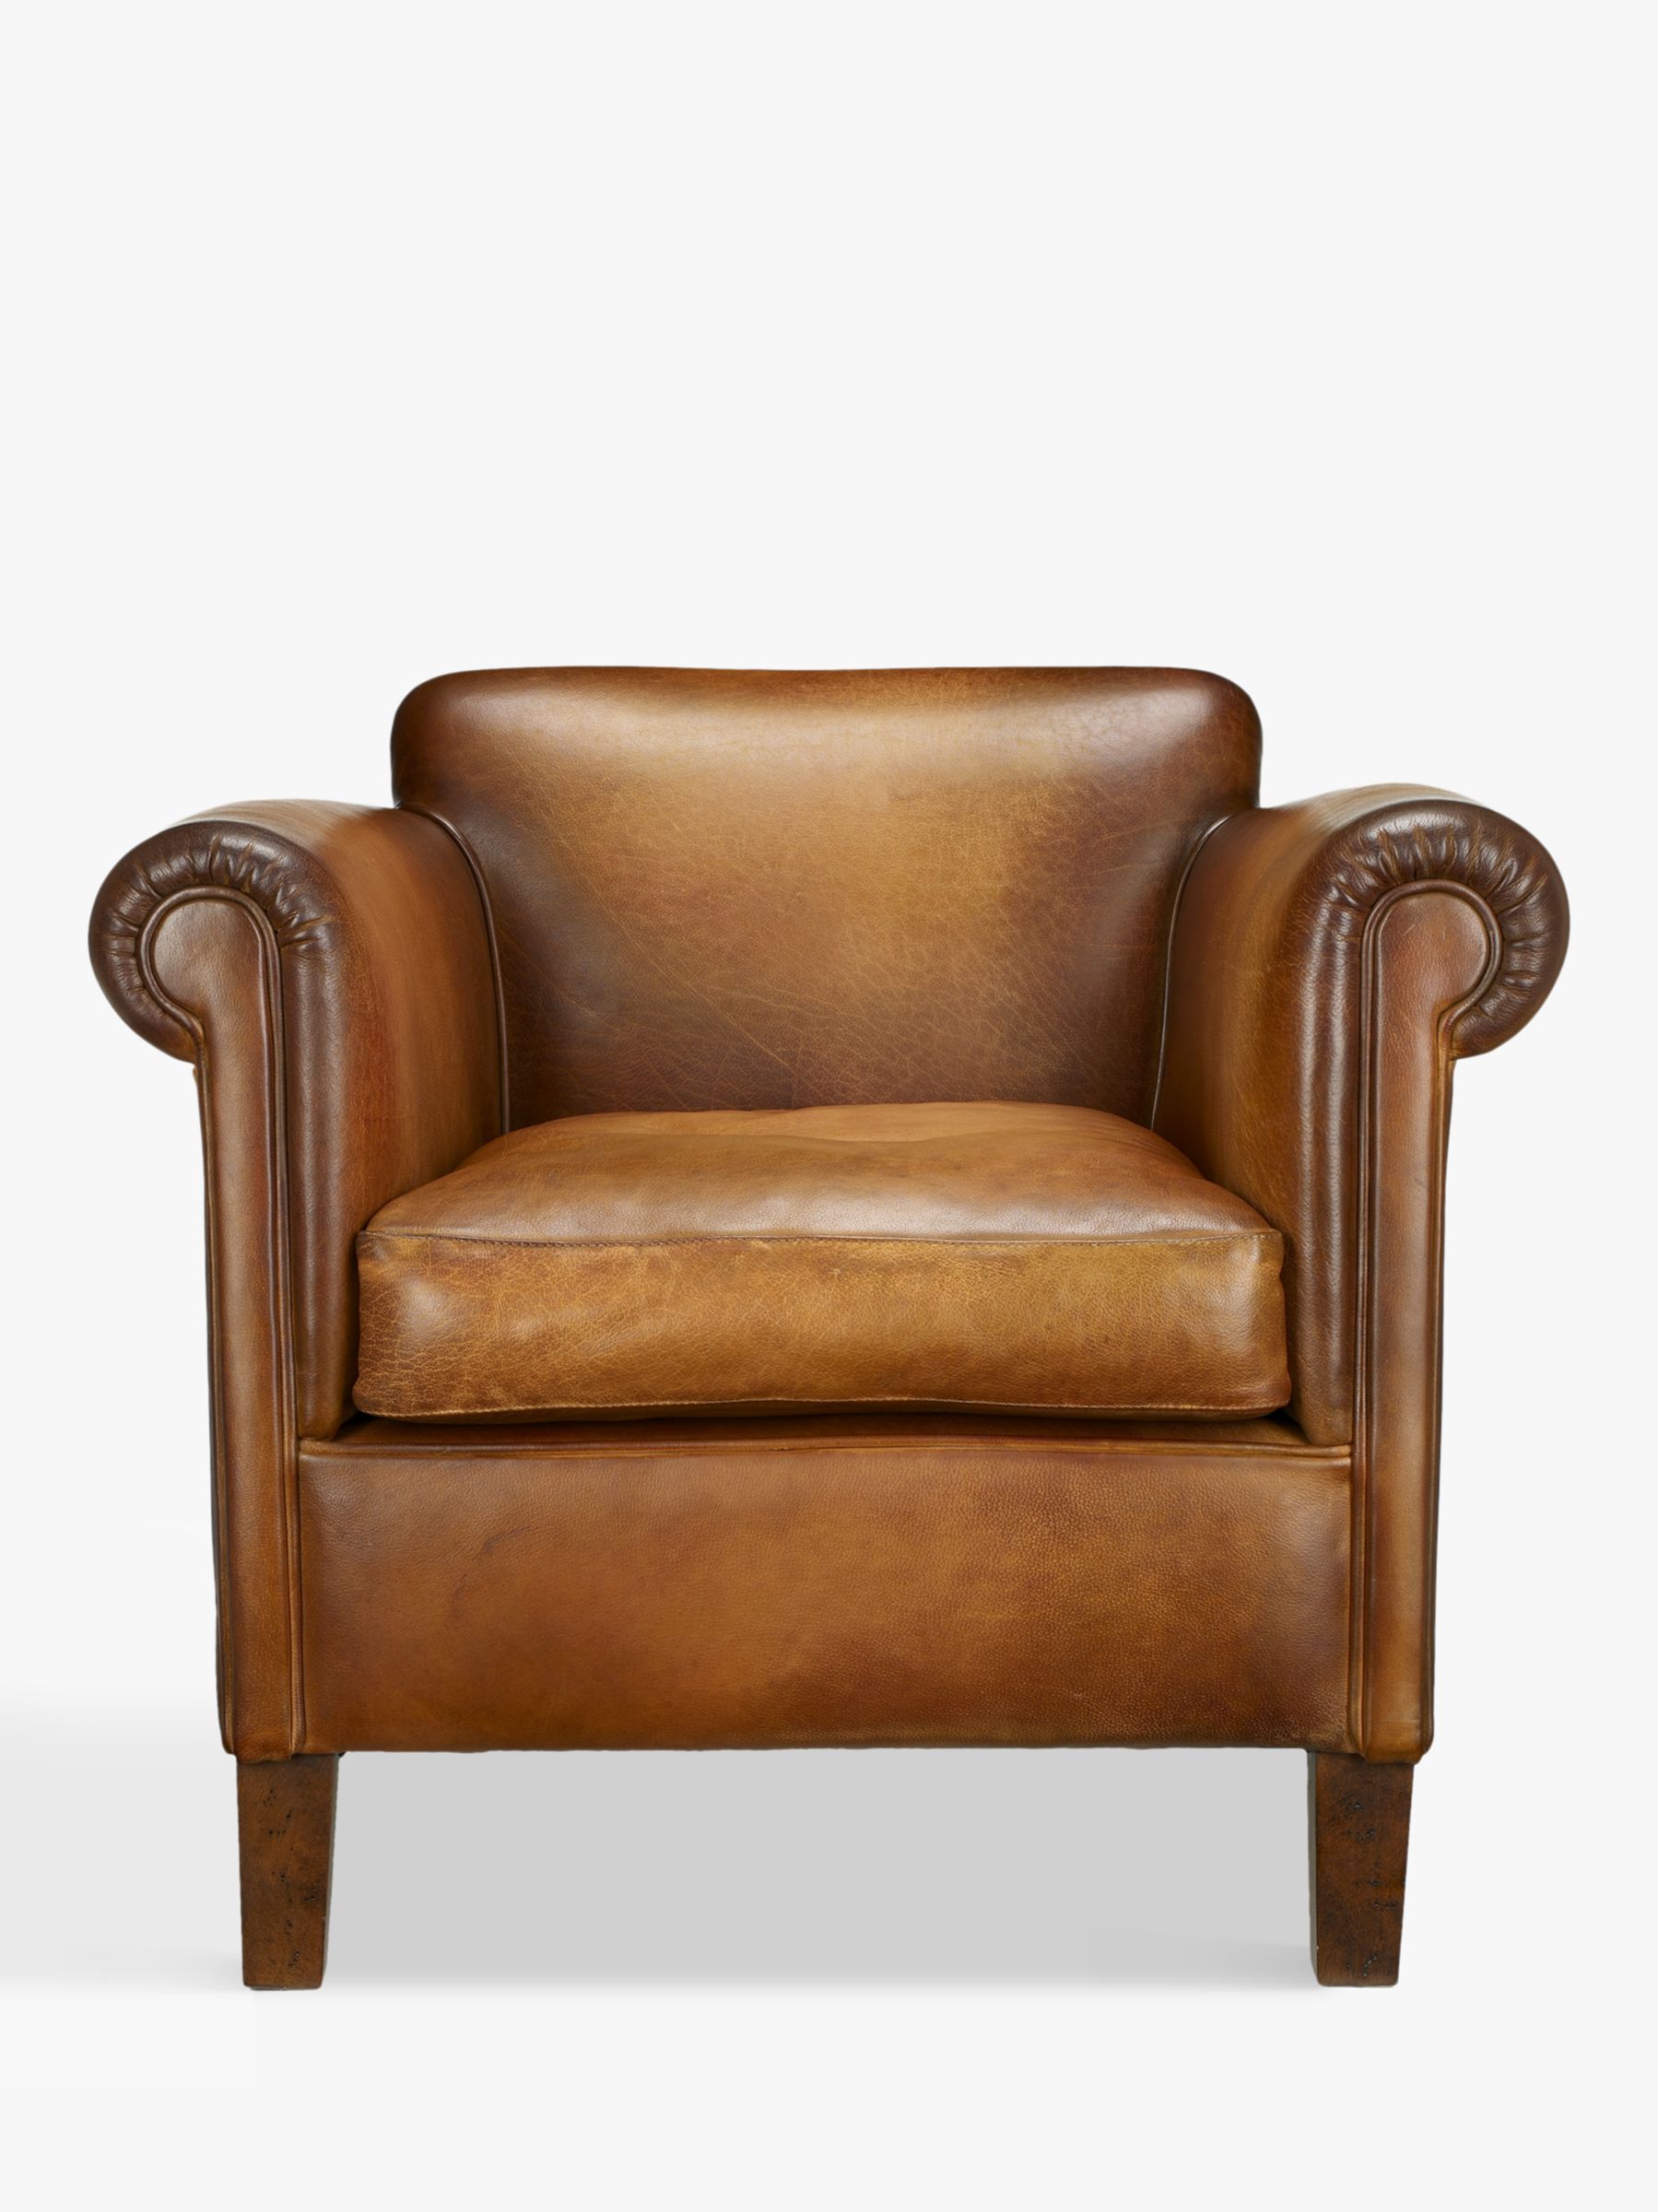 John Lewis & Partners Camford Leather Armchair, Buffalo Antique at John Lewis & Partners